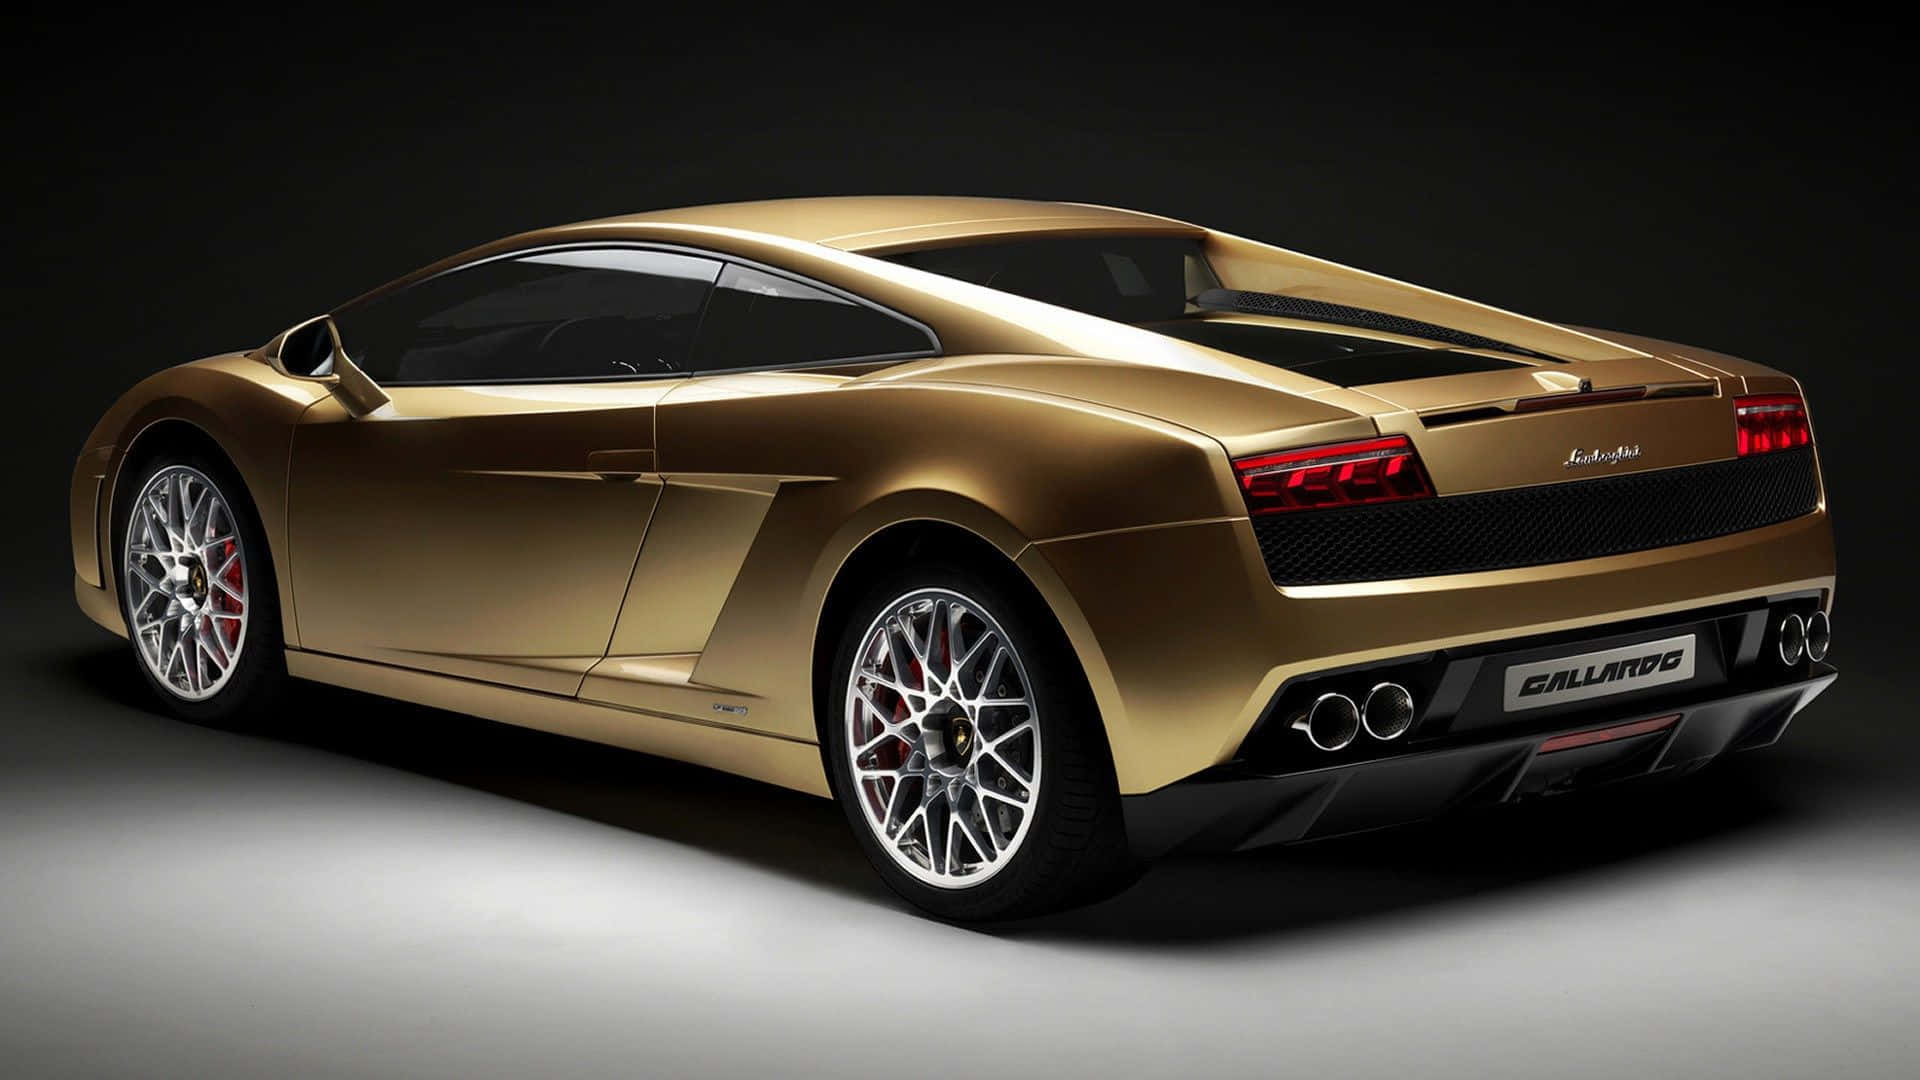 A gold Lamborghini parked at sunset Wallpaper